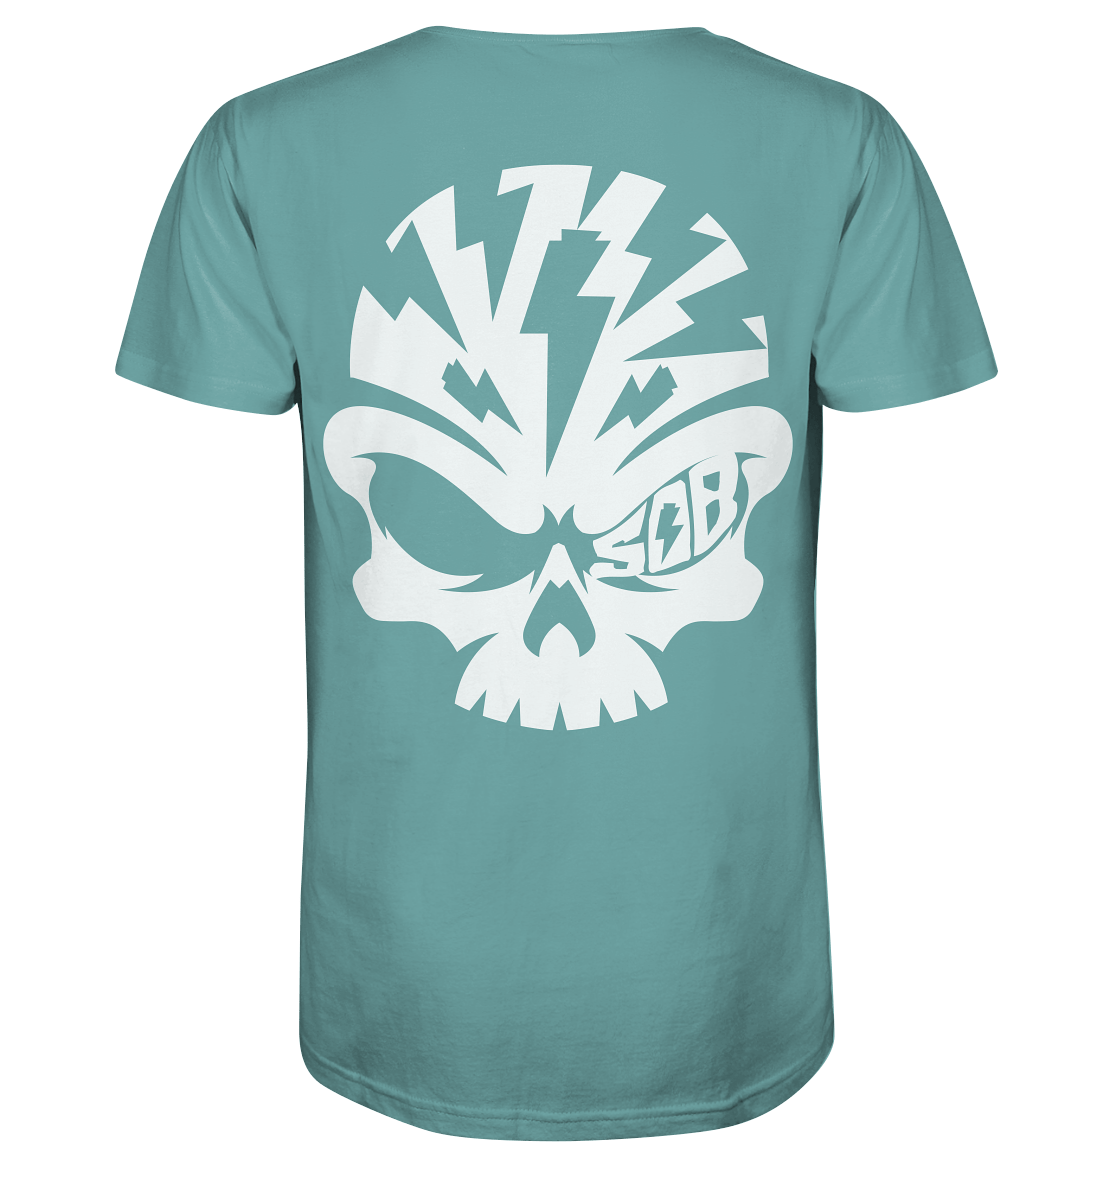 Sons of Battery® - E-MTB Brand & Community Unisex-Shirts Citadel Blue / XS SoB Skull White - Organic Shirt E-Bike-Community